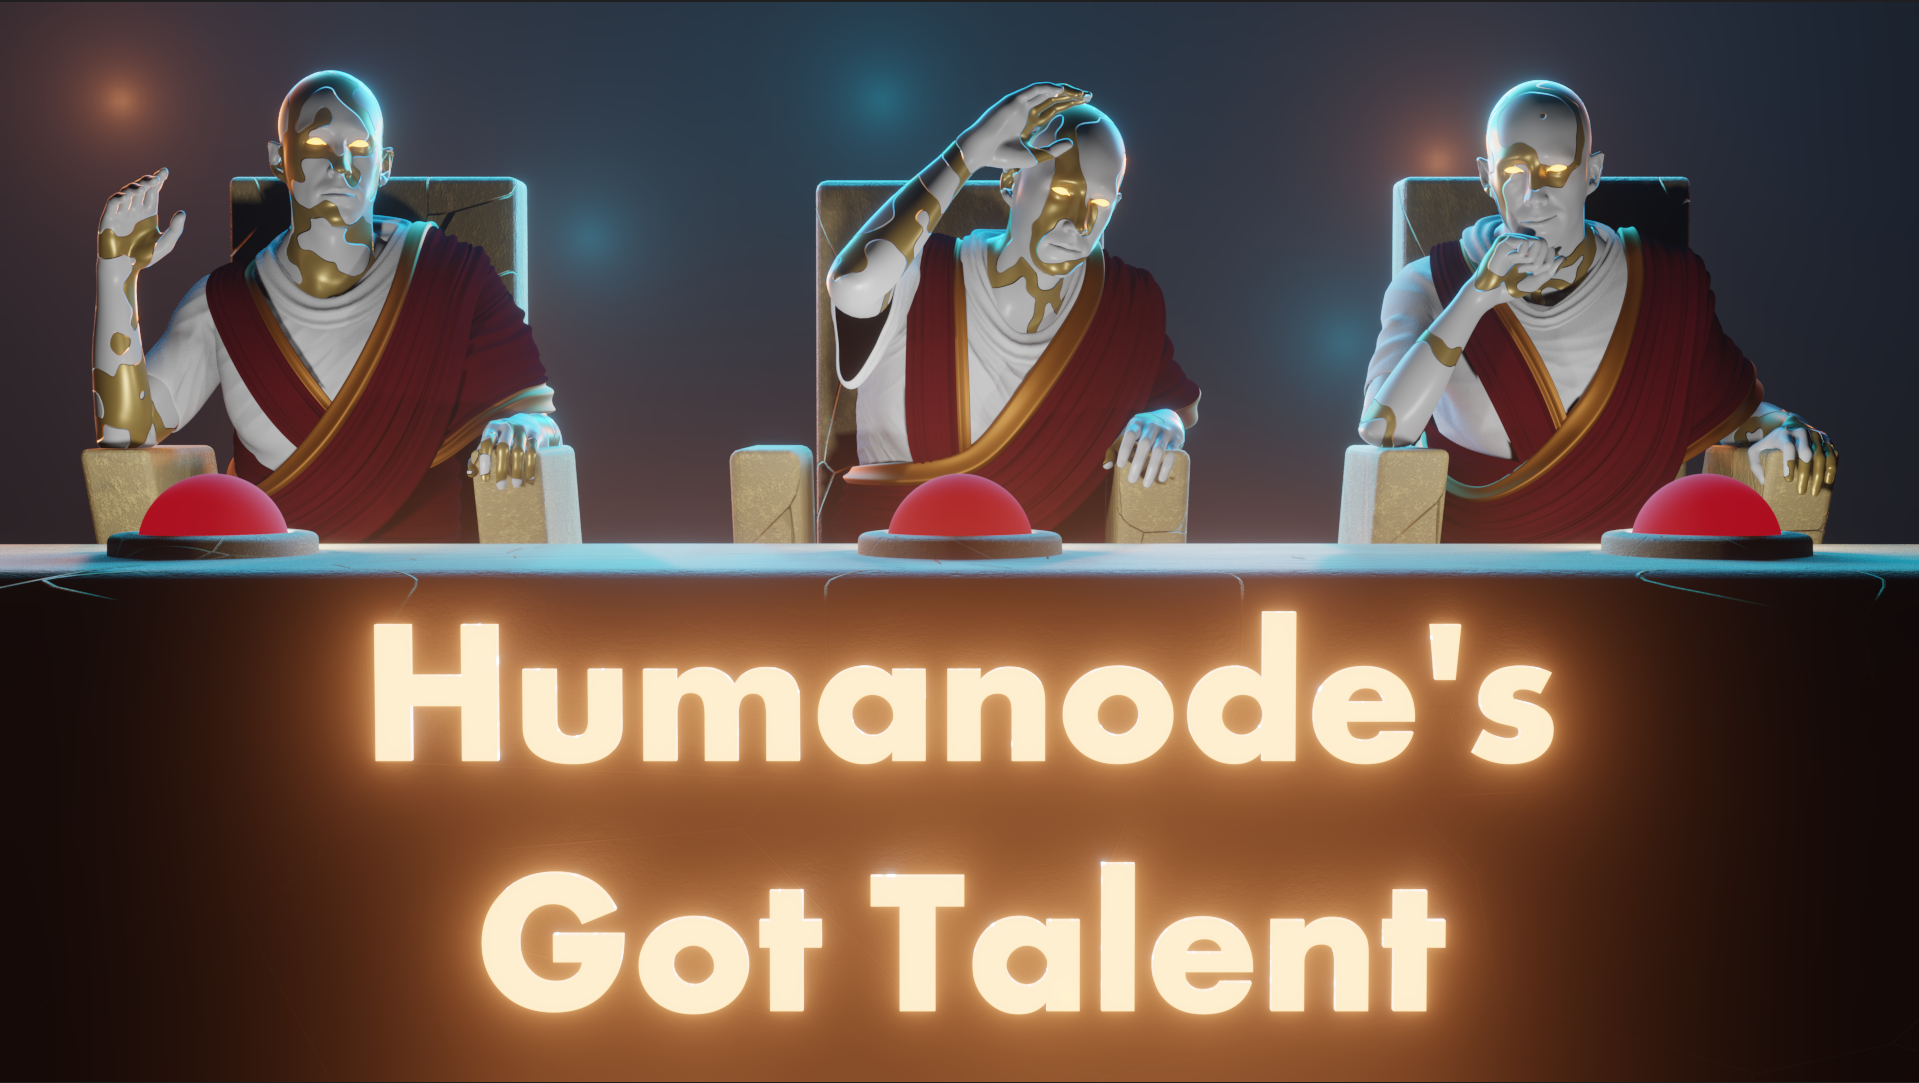 Announcing “Humanode's Got Talent” Contest Winners